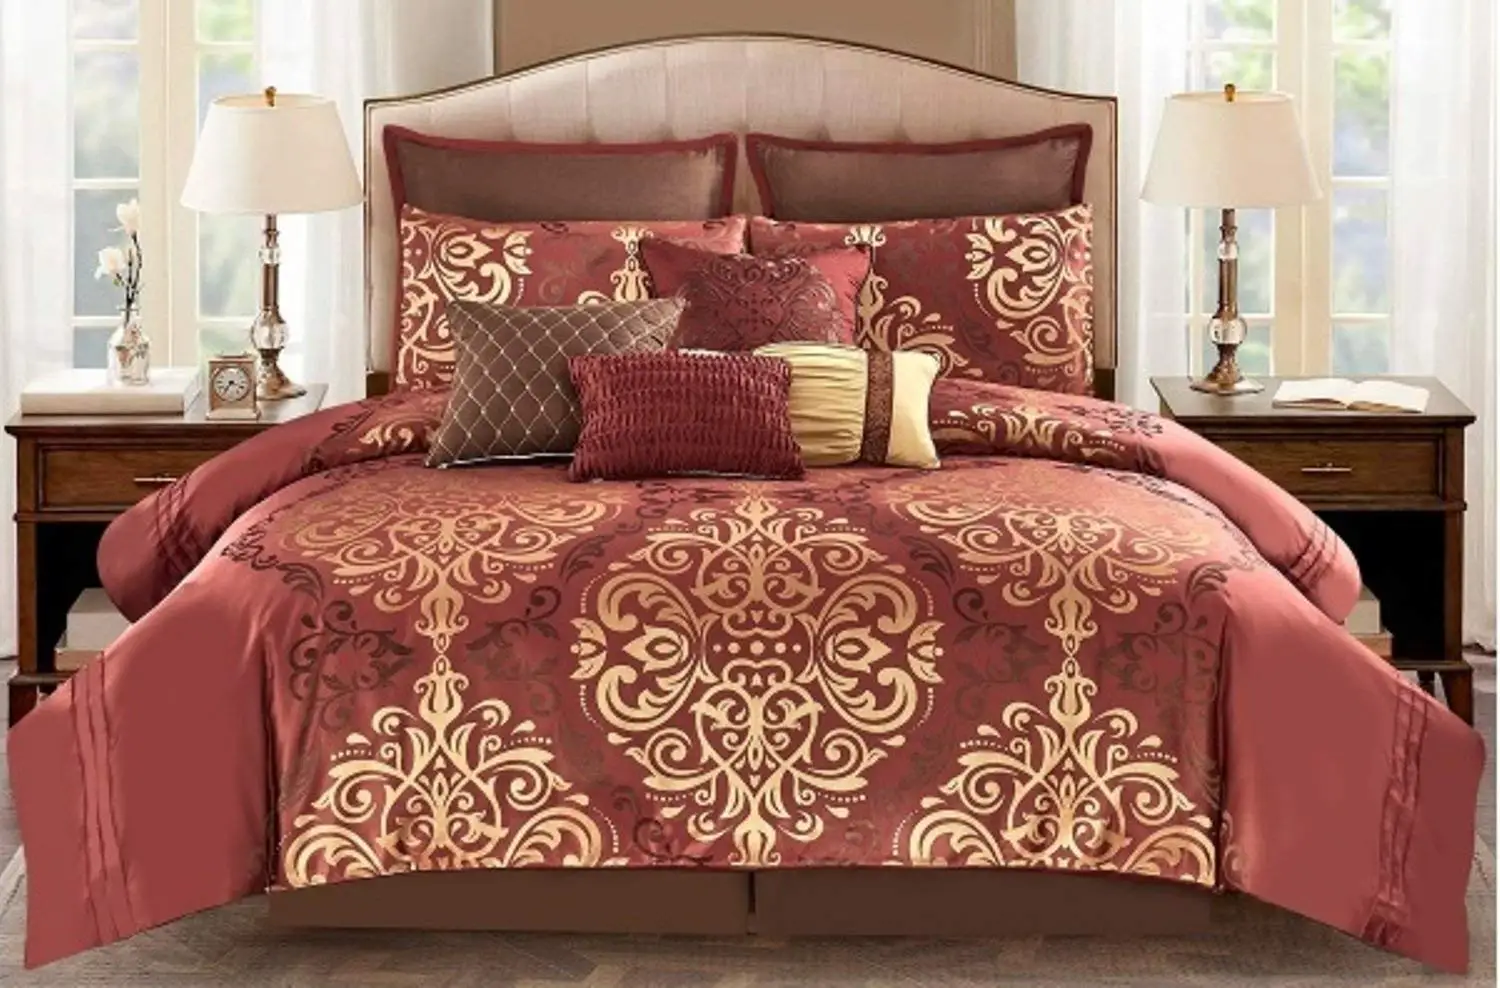 king size comforter set textured jacquard design